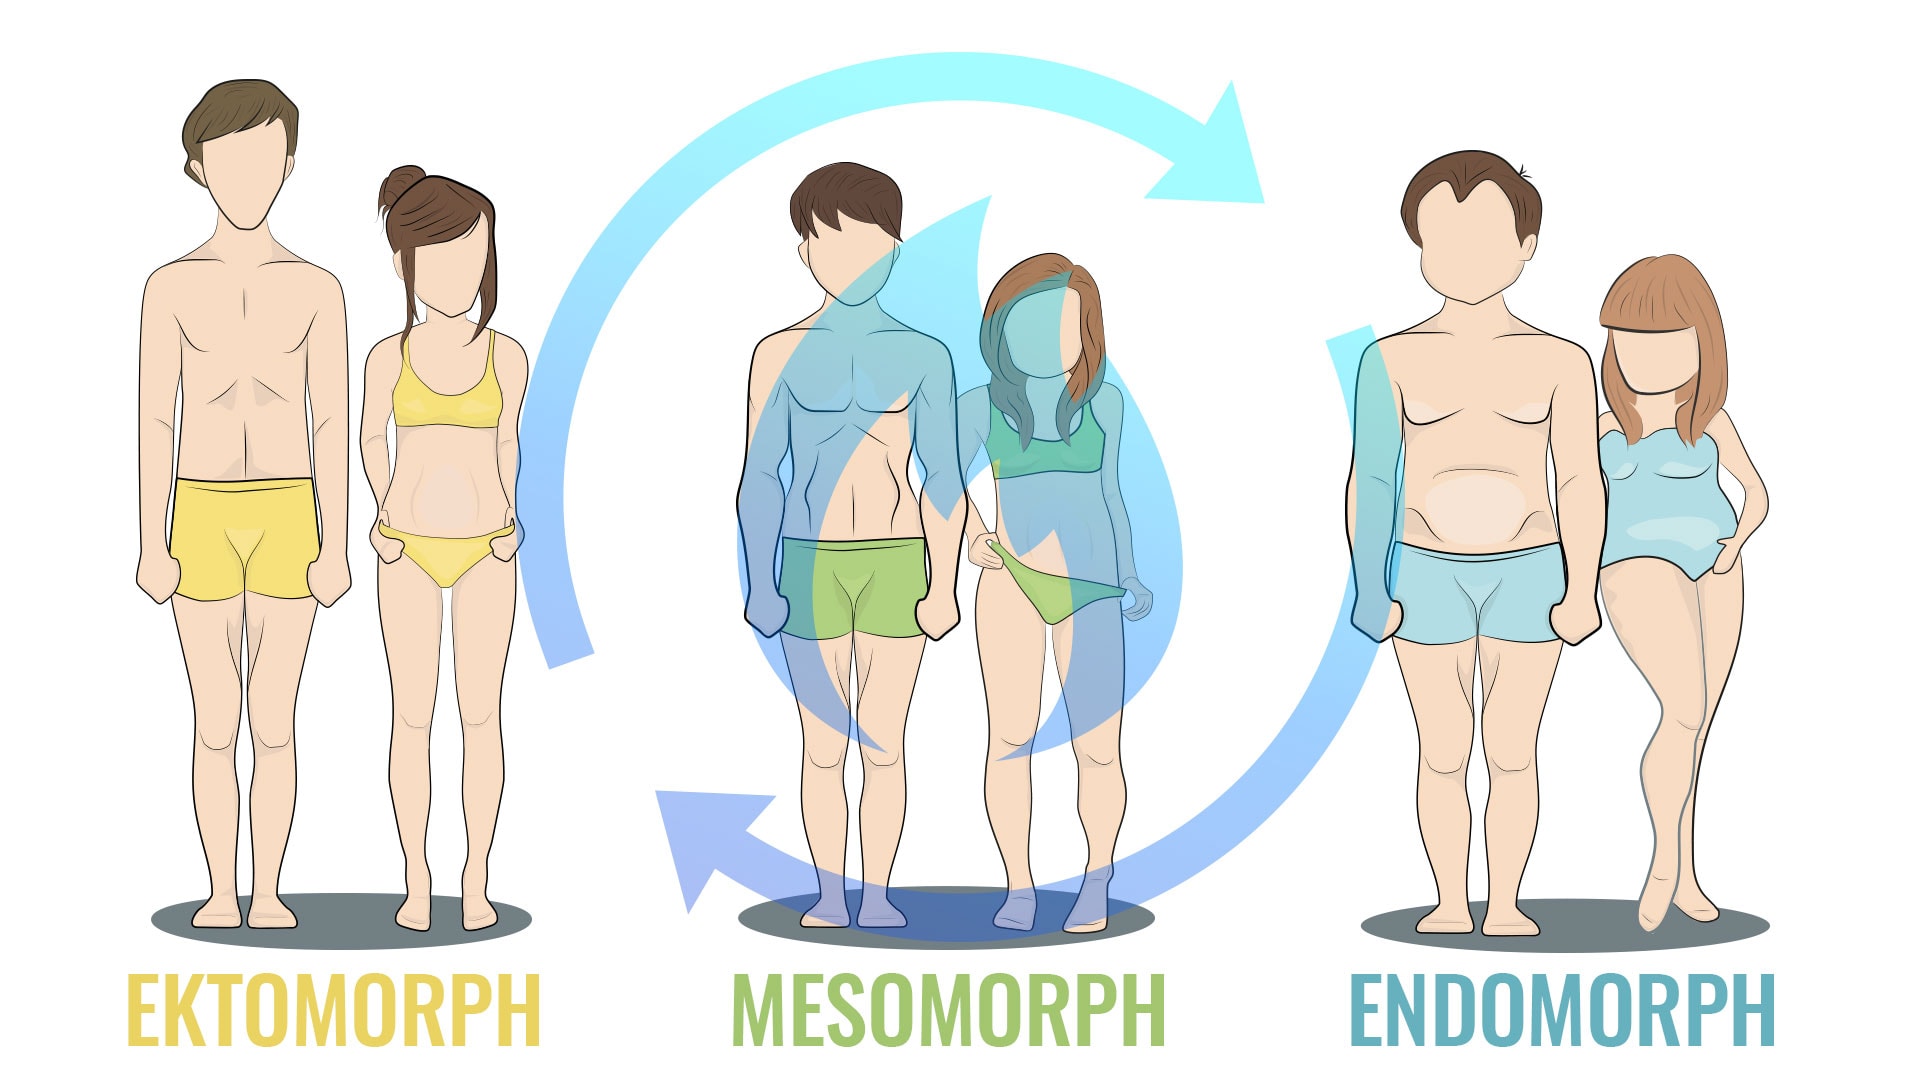 Körpertypen: Ektomorph, Mesomorph und Endomorph